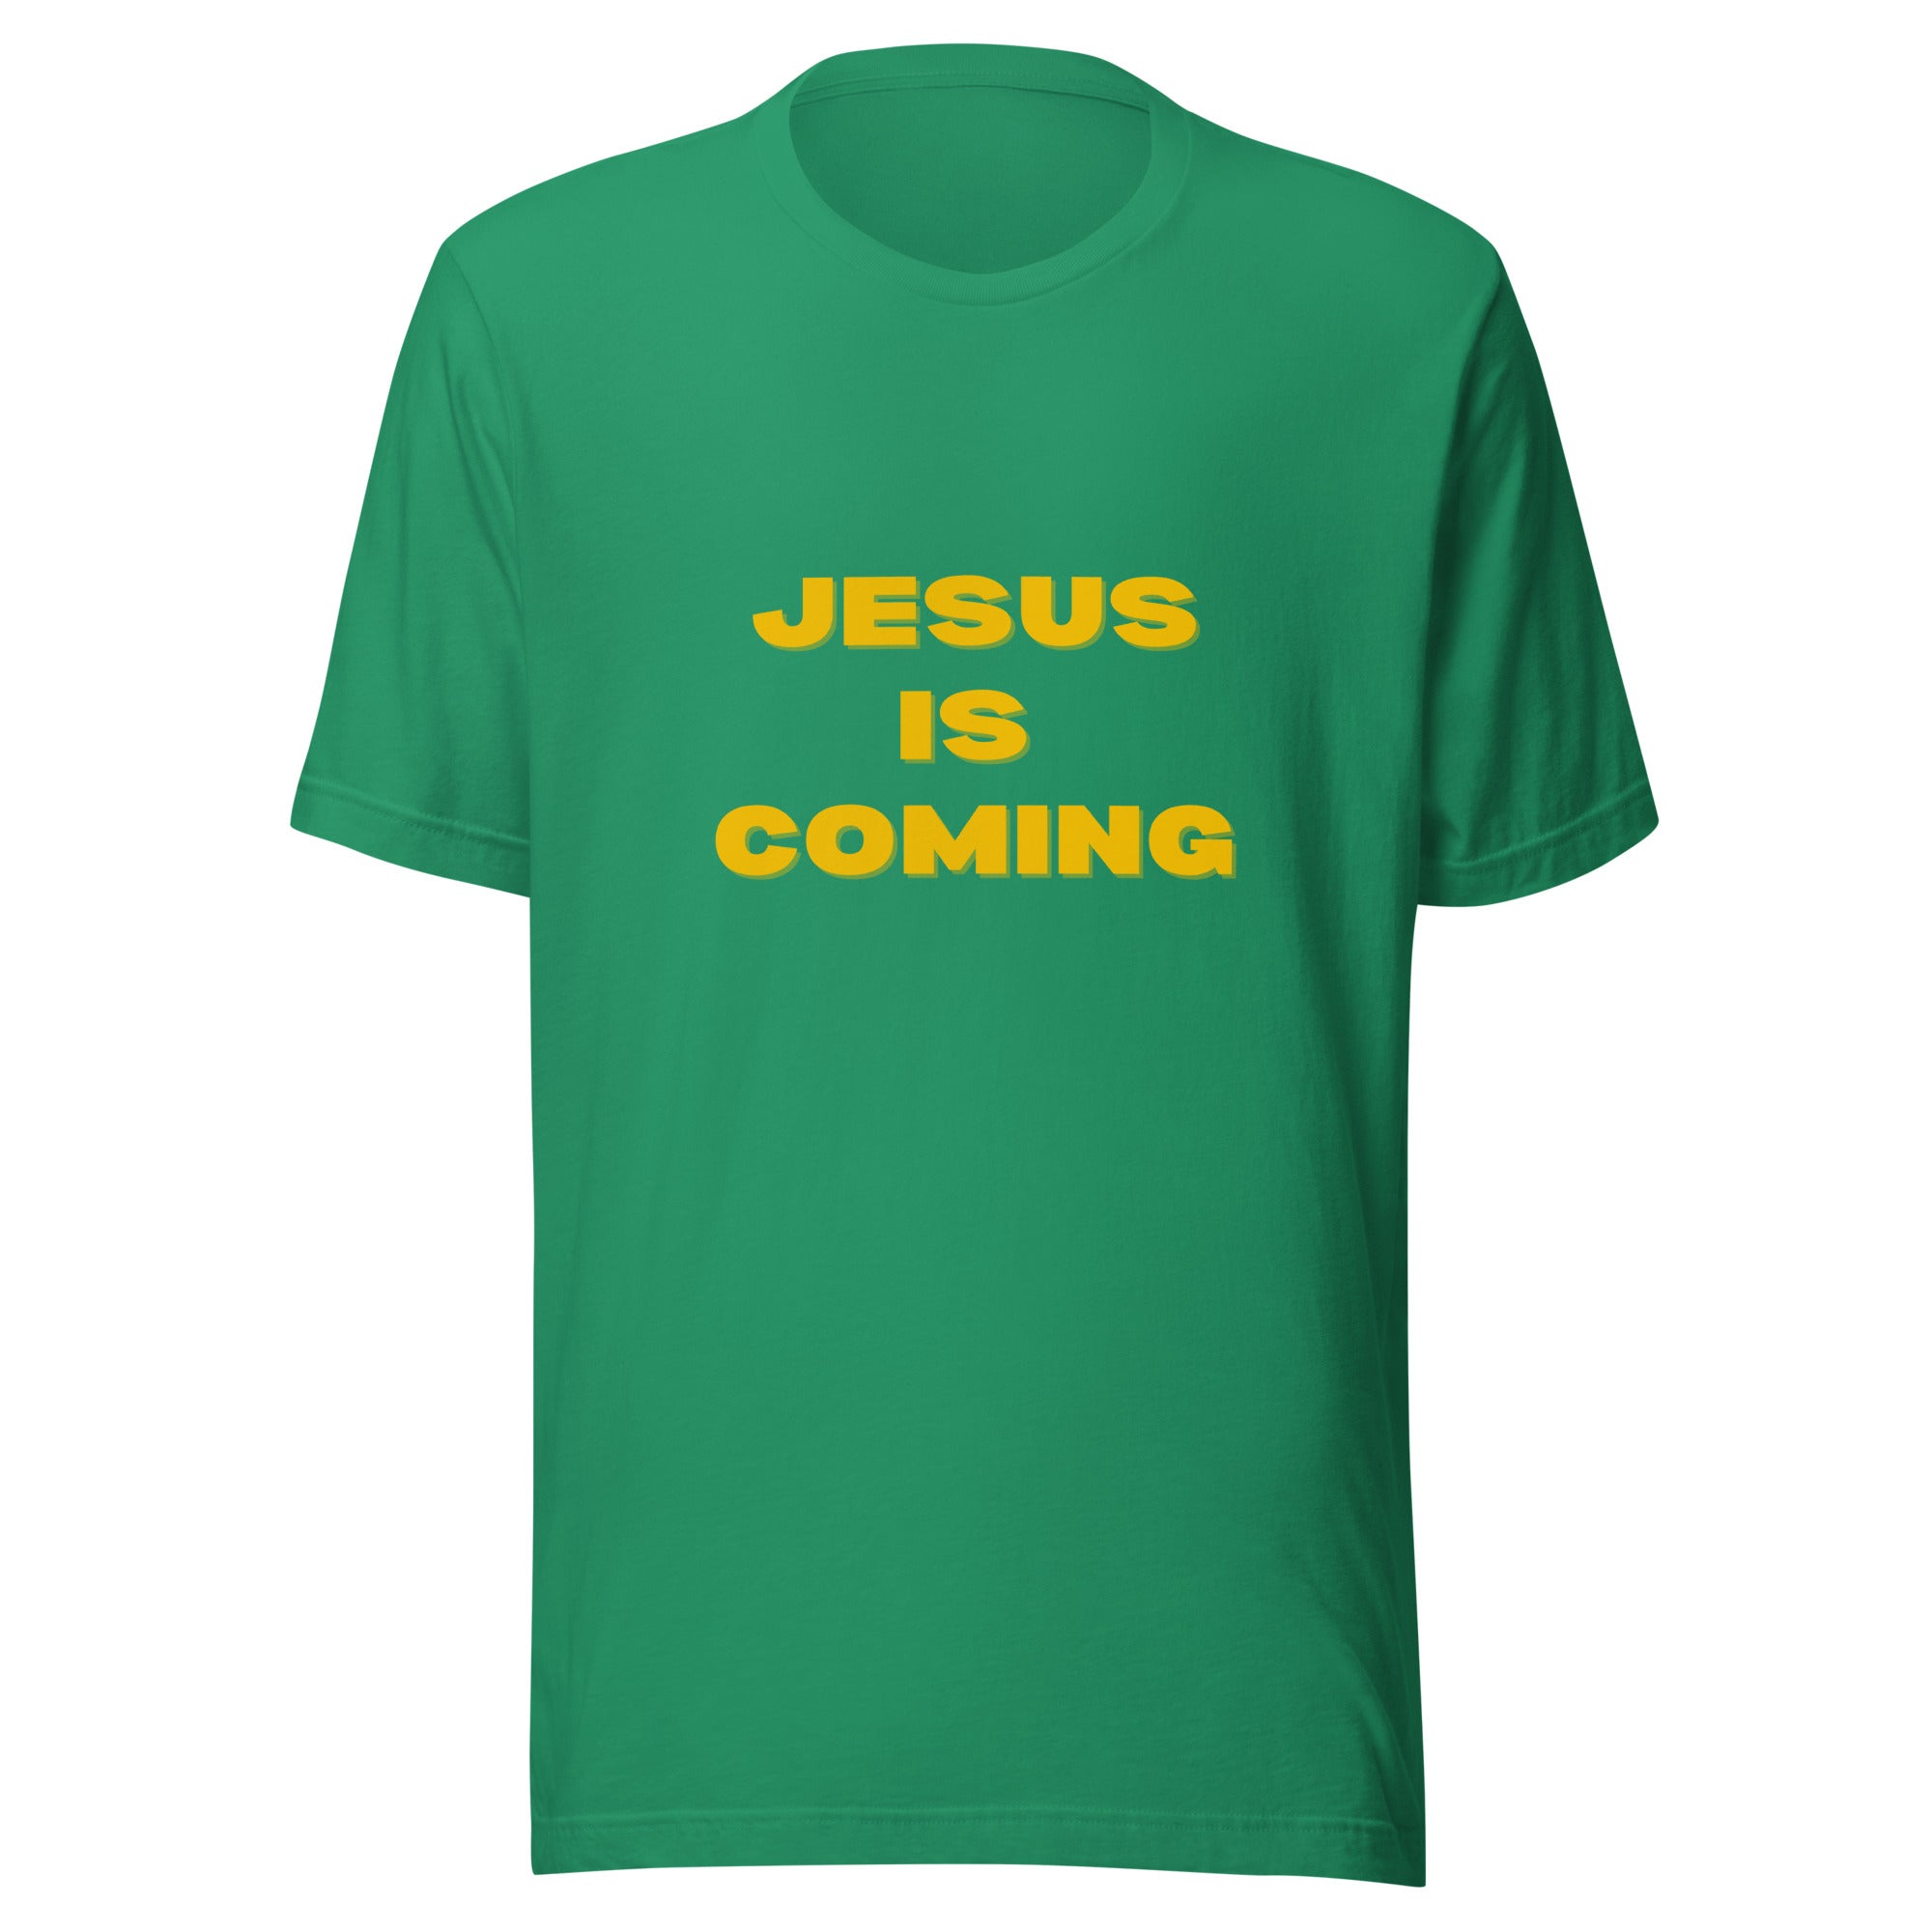 JESUS IS COMING Unisex t-shirt